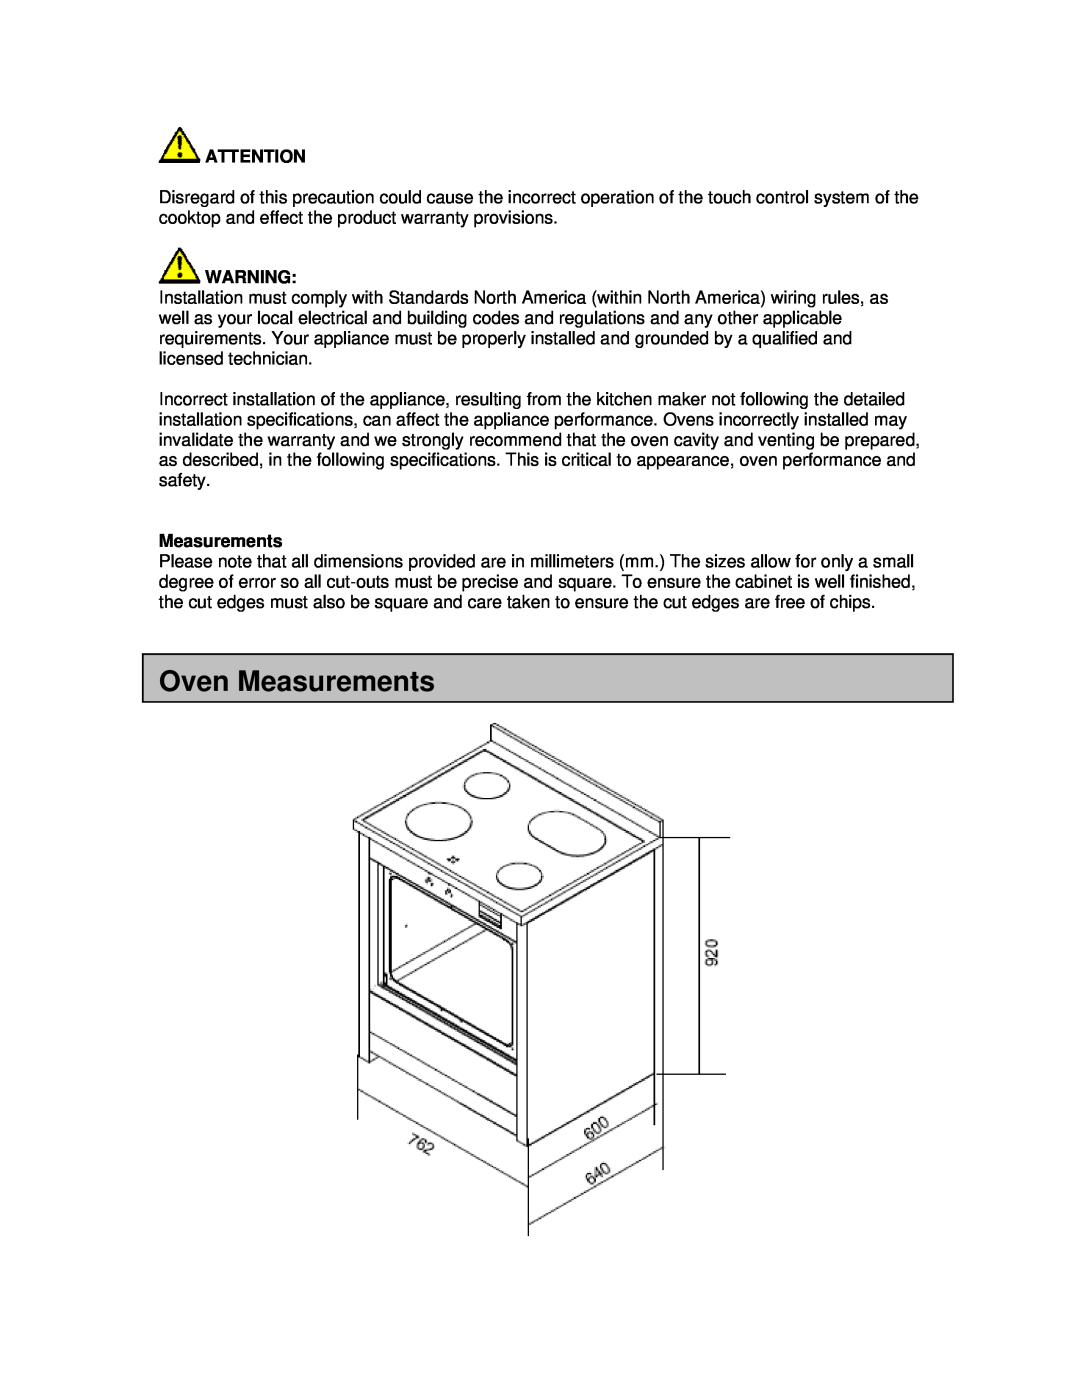 AEG 3007VNM-M manual Oven Measurements 